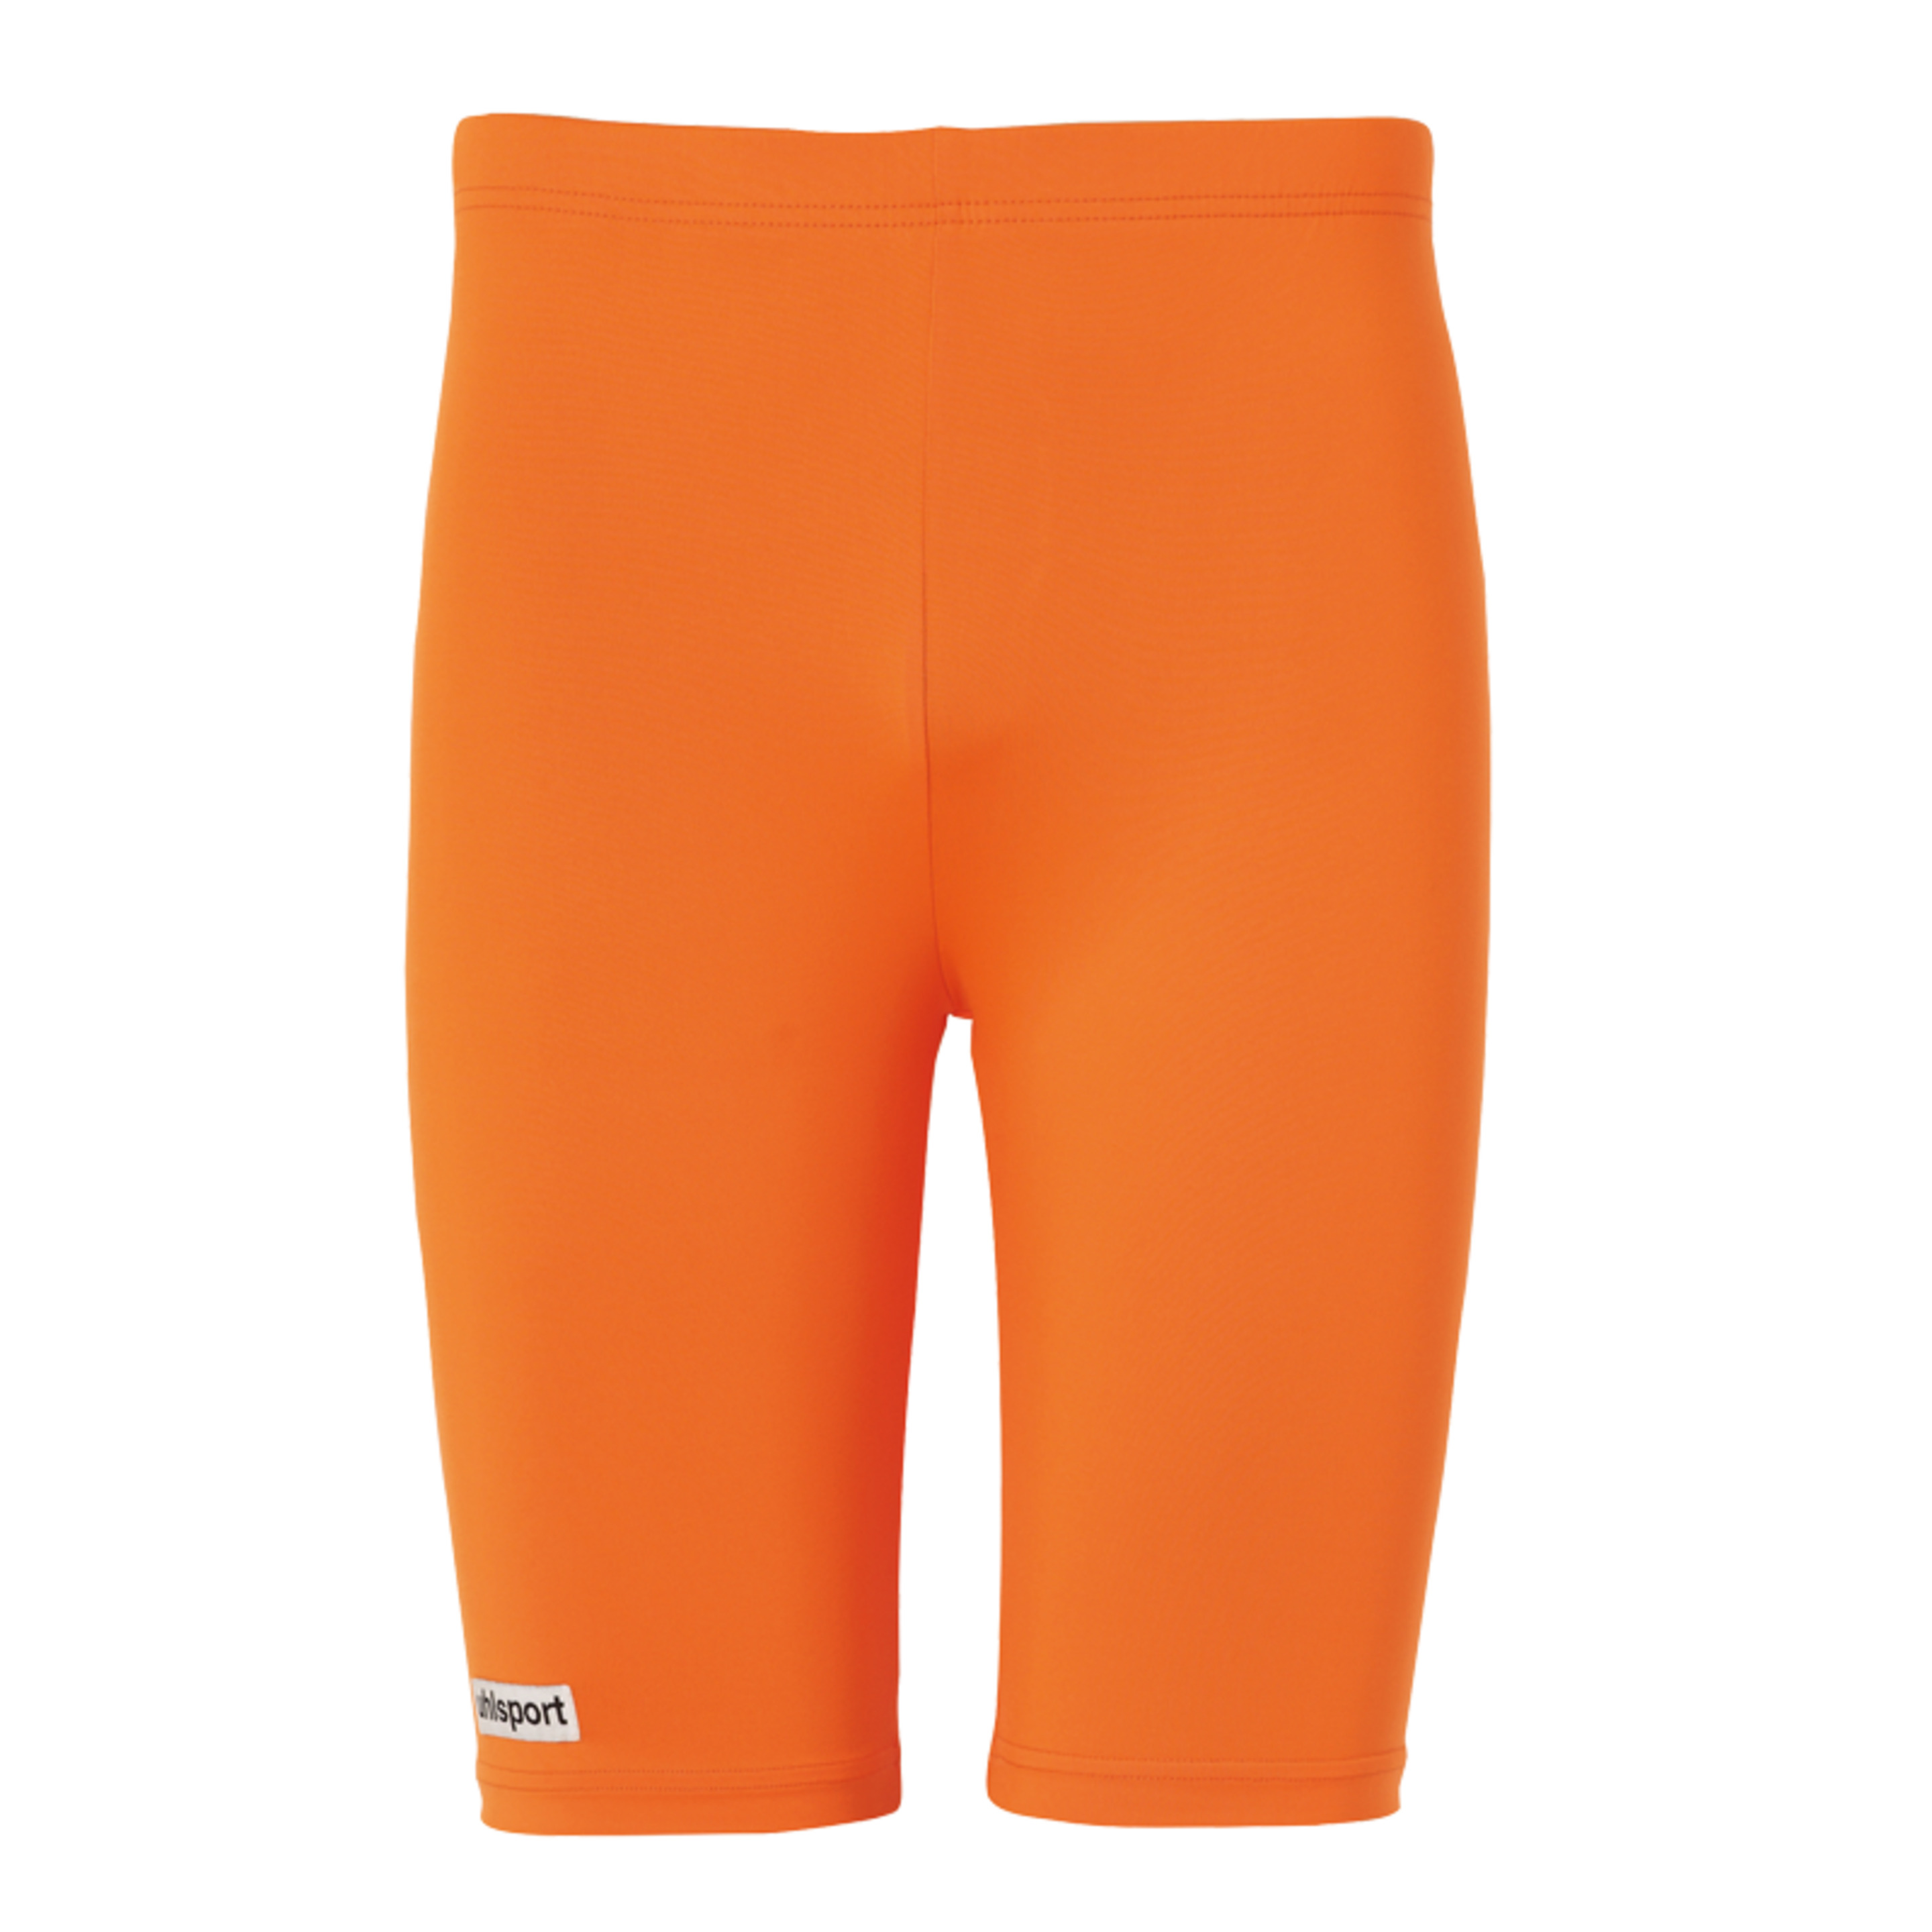 Distinction Colors Tights Naranja Fluor Uhlsport